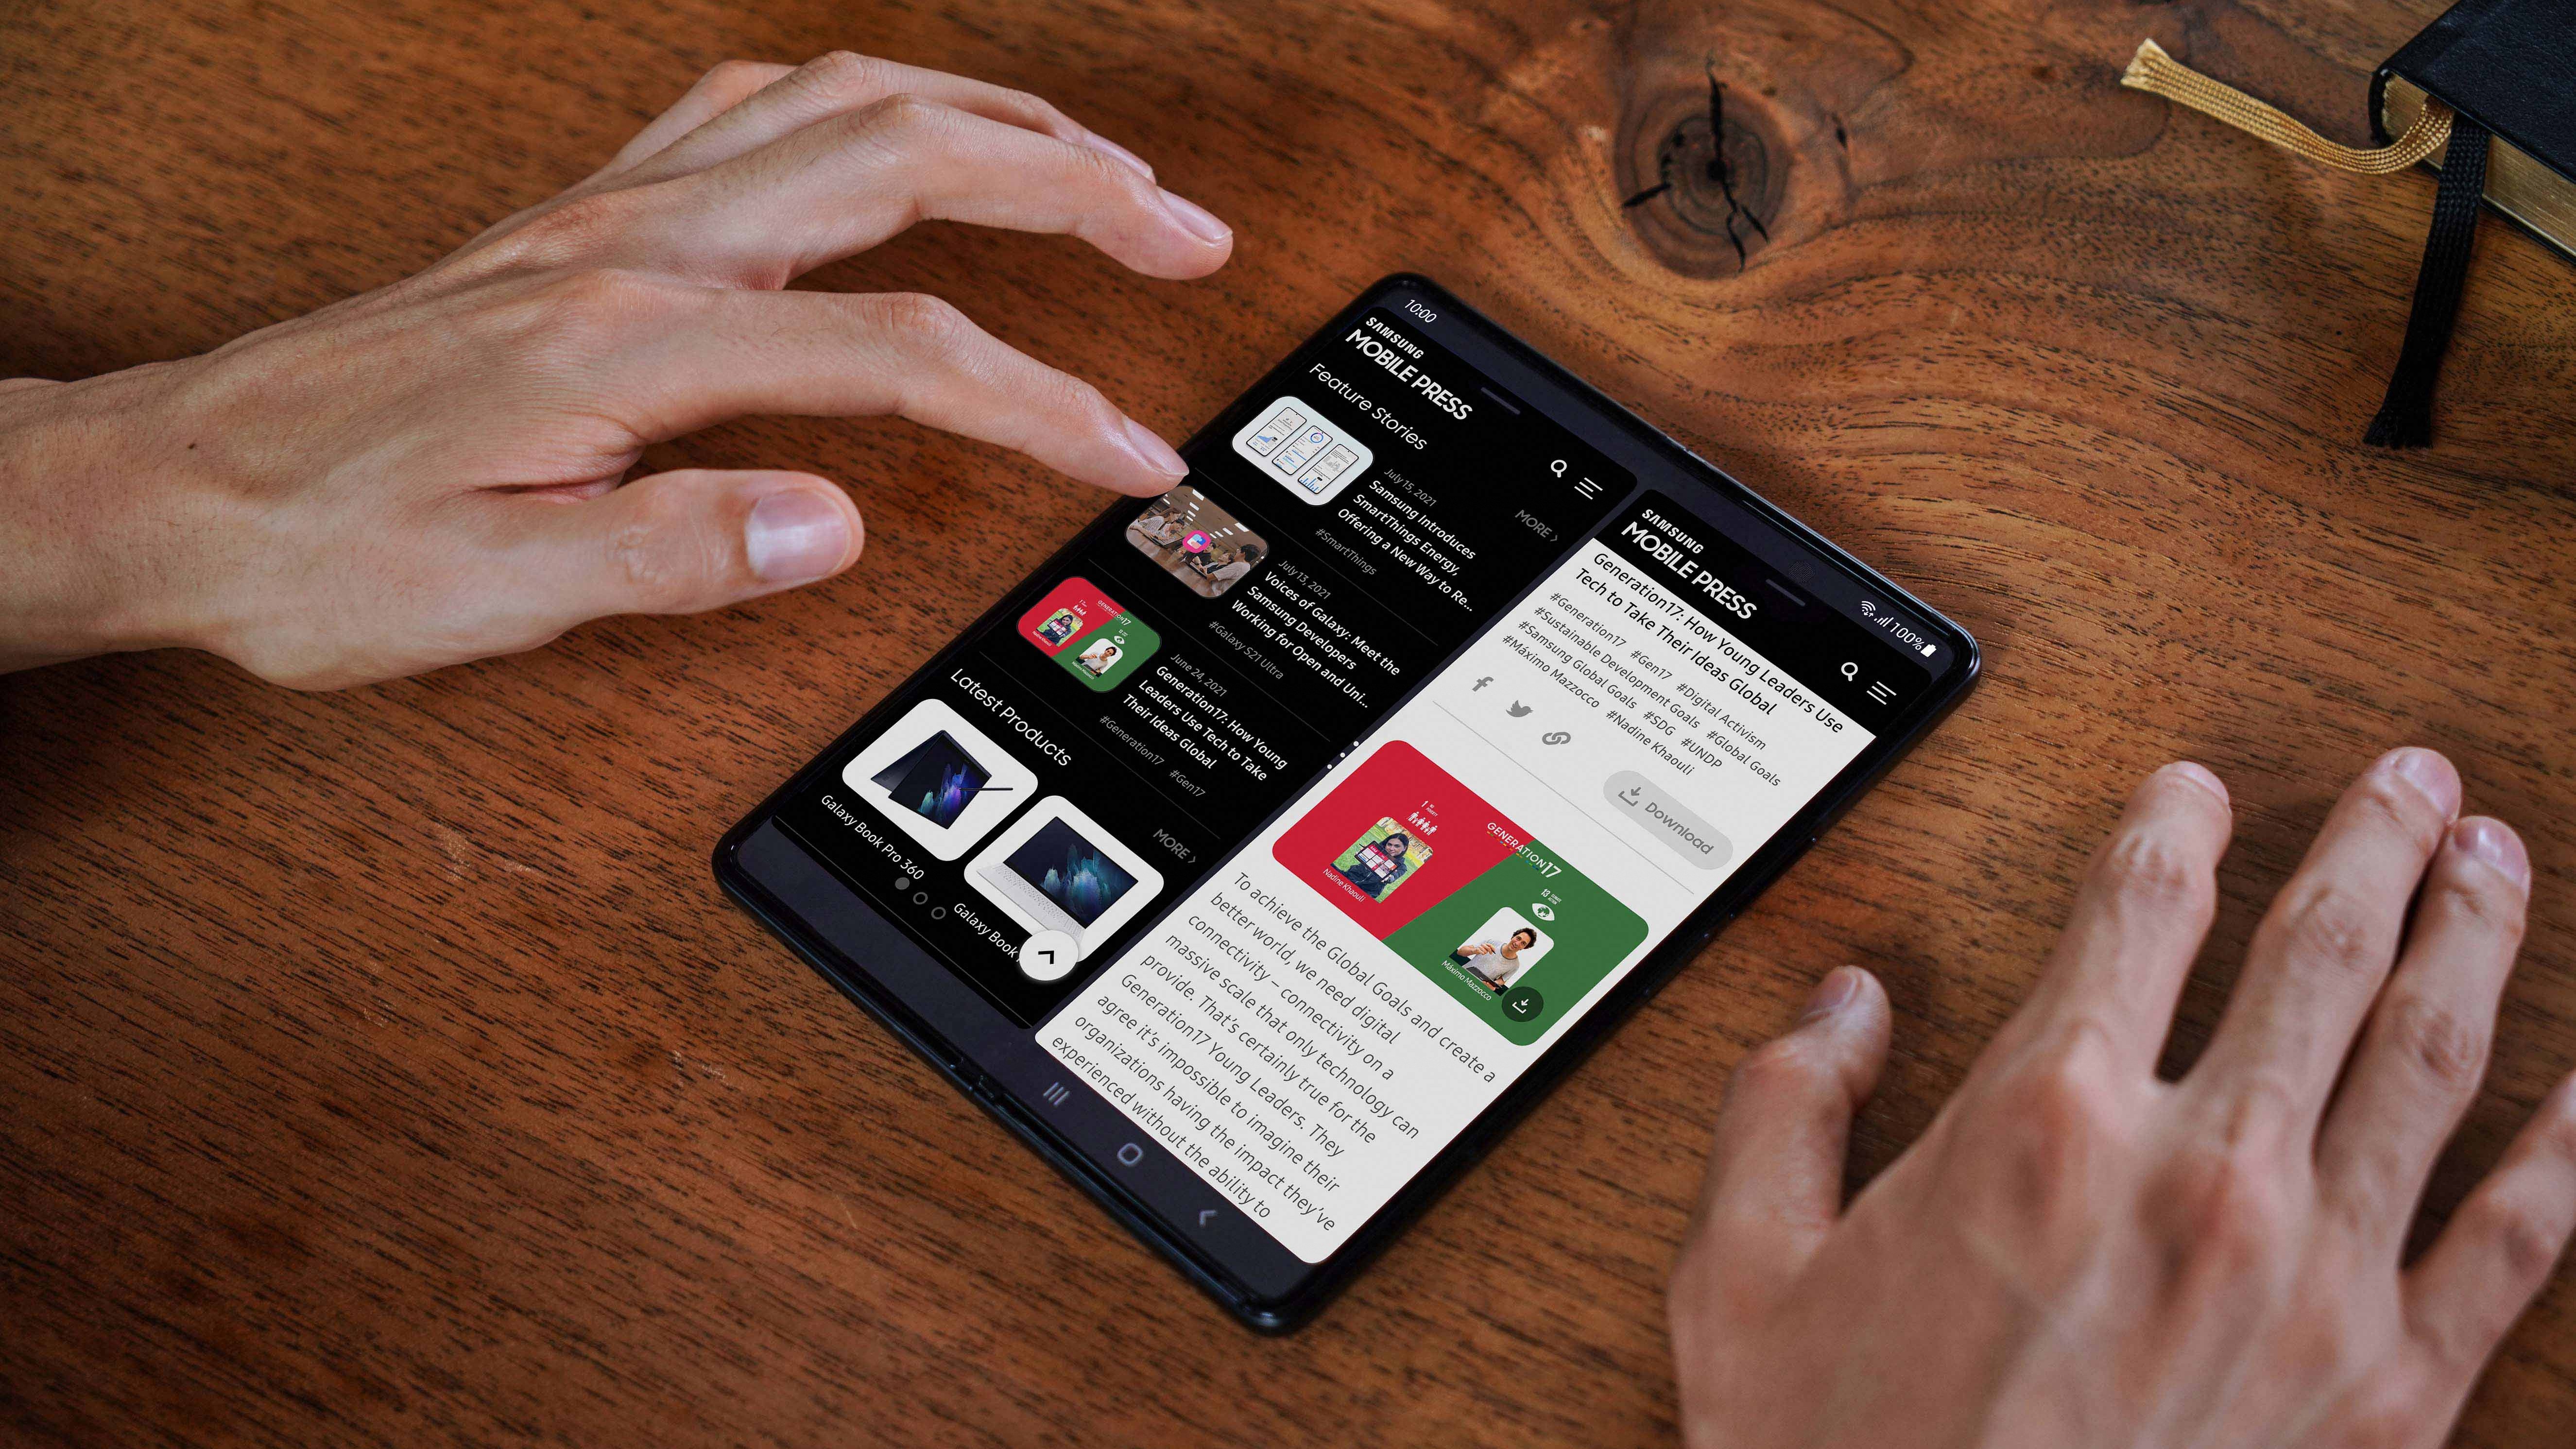 Samsung Galaxy Z Fold 3, Flip 3 multitasking features getting